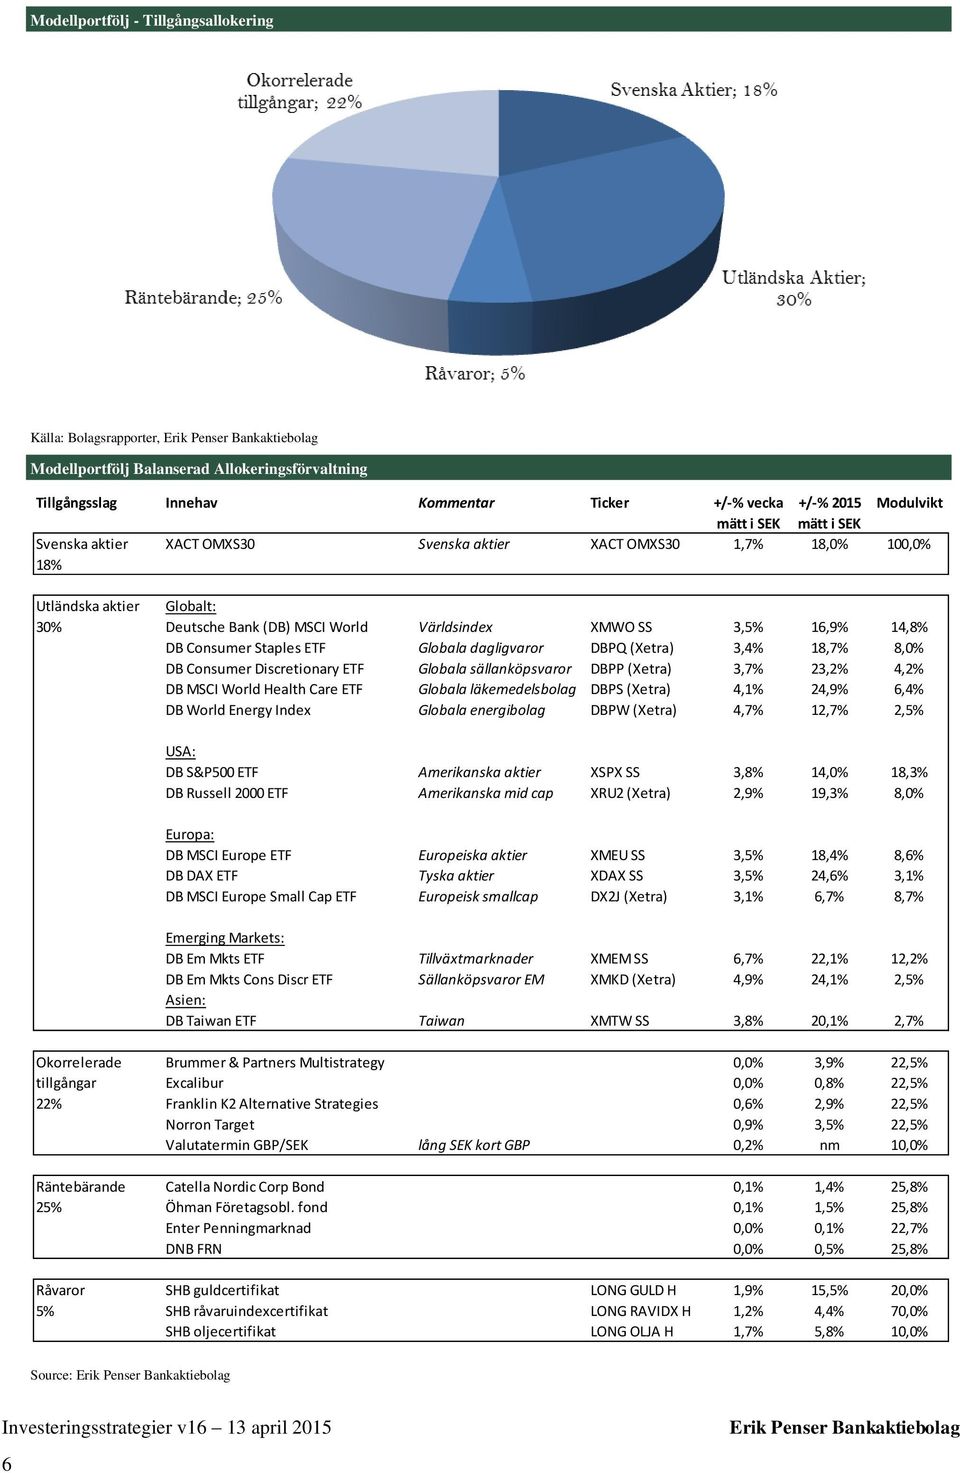 14,8% DB Consumer Staples ETF Globala dagligvaror DBPQ (Xetra) 3,4% 18,7% 8,0% DB Consumer Discretionary ETF Globala sällanköpsvaror DBPP (Xetra) 3,7% 23,2% 4,2% DB MSCI World Health Care ETF Globala